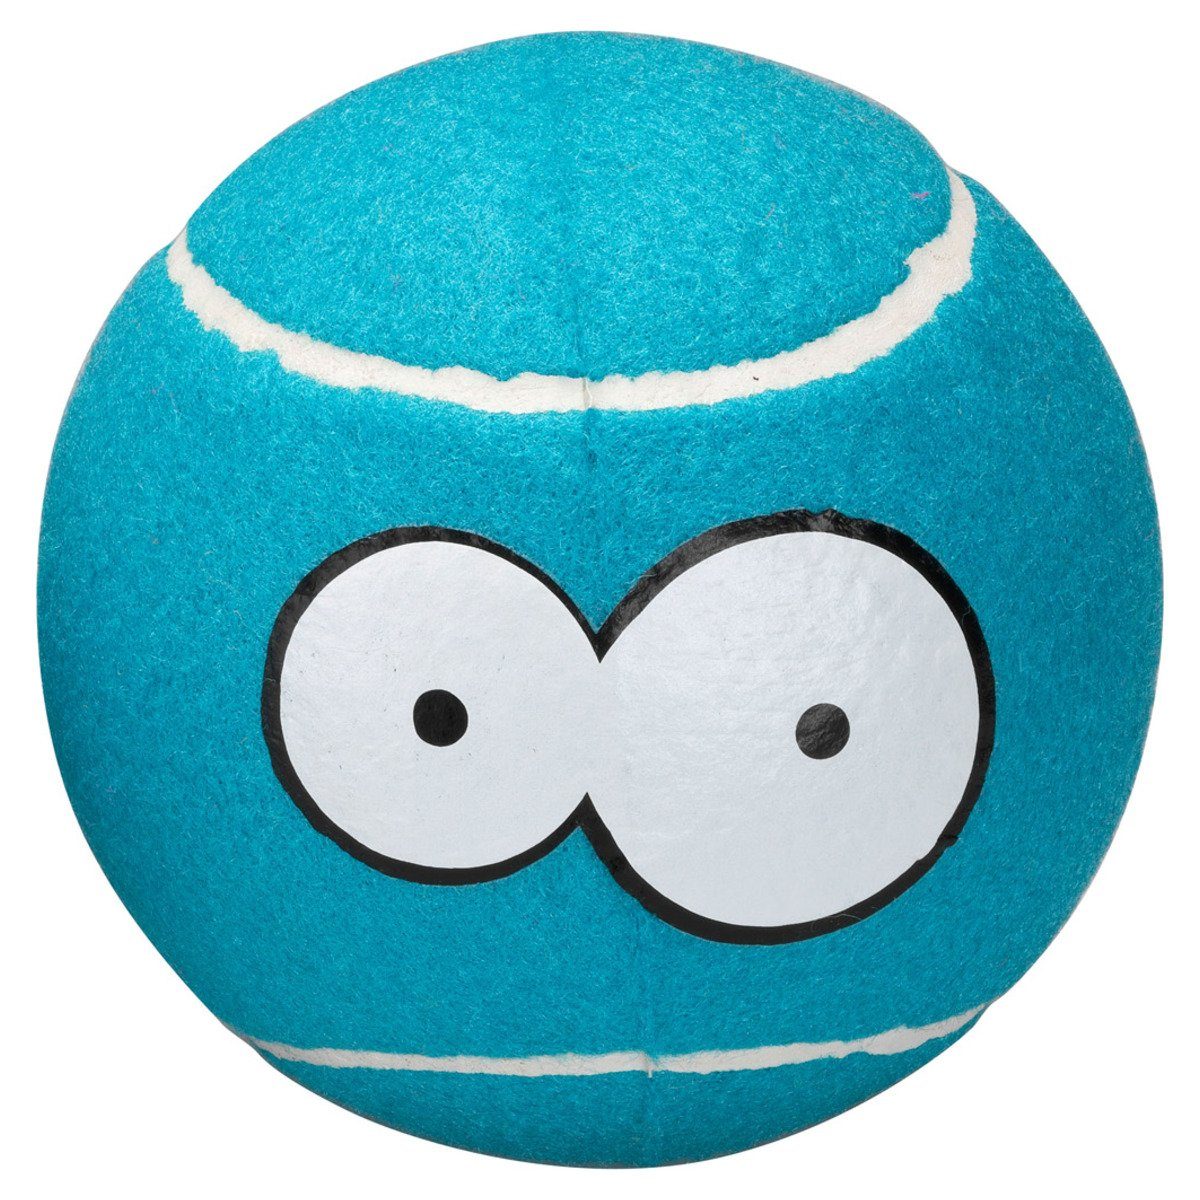 Coockoo Spielball Hundespielzeug Tennisball blau